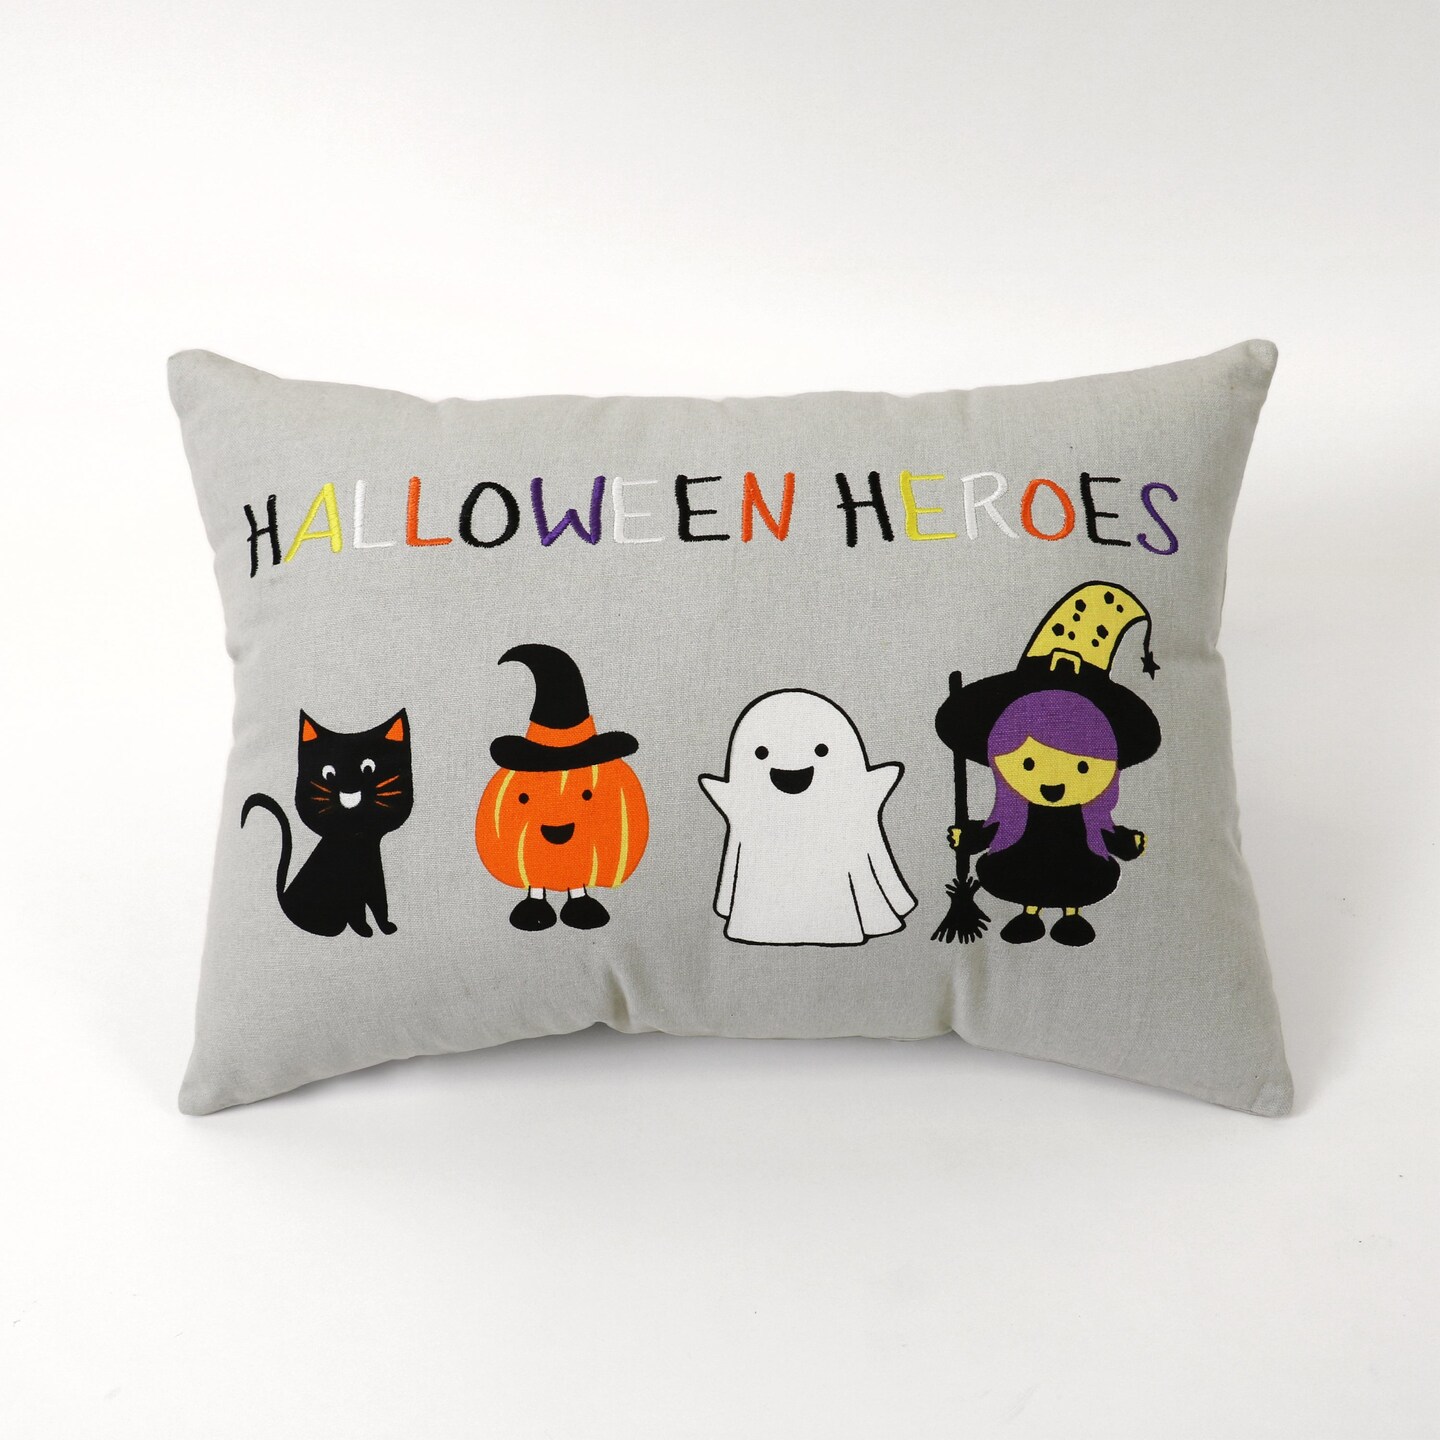 Halloween Heroes Decorative Pillow - 14 x 20 inch